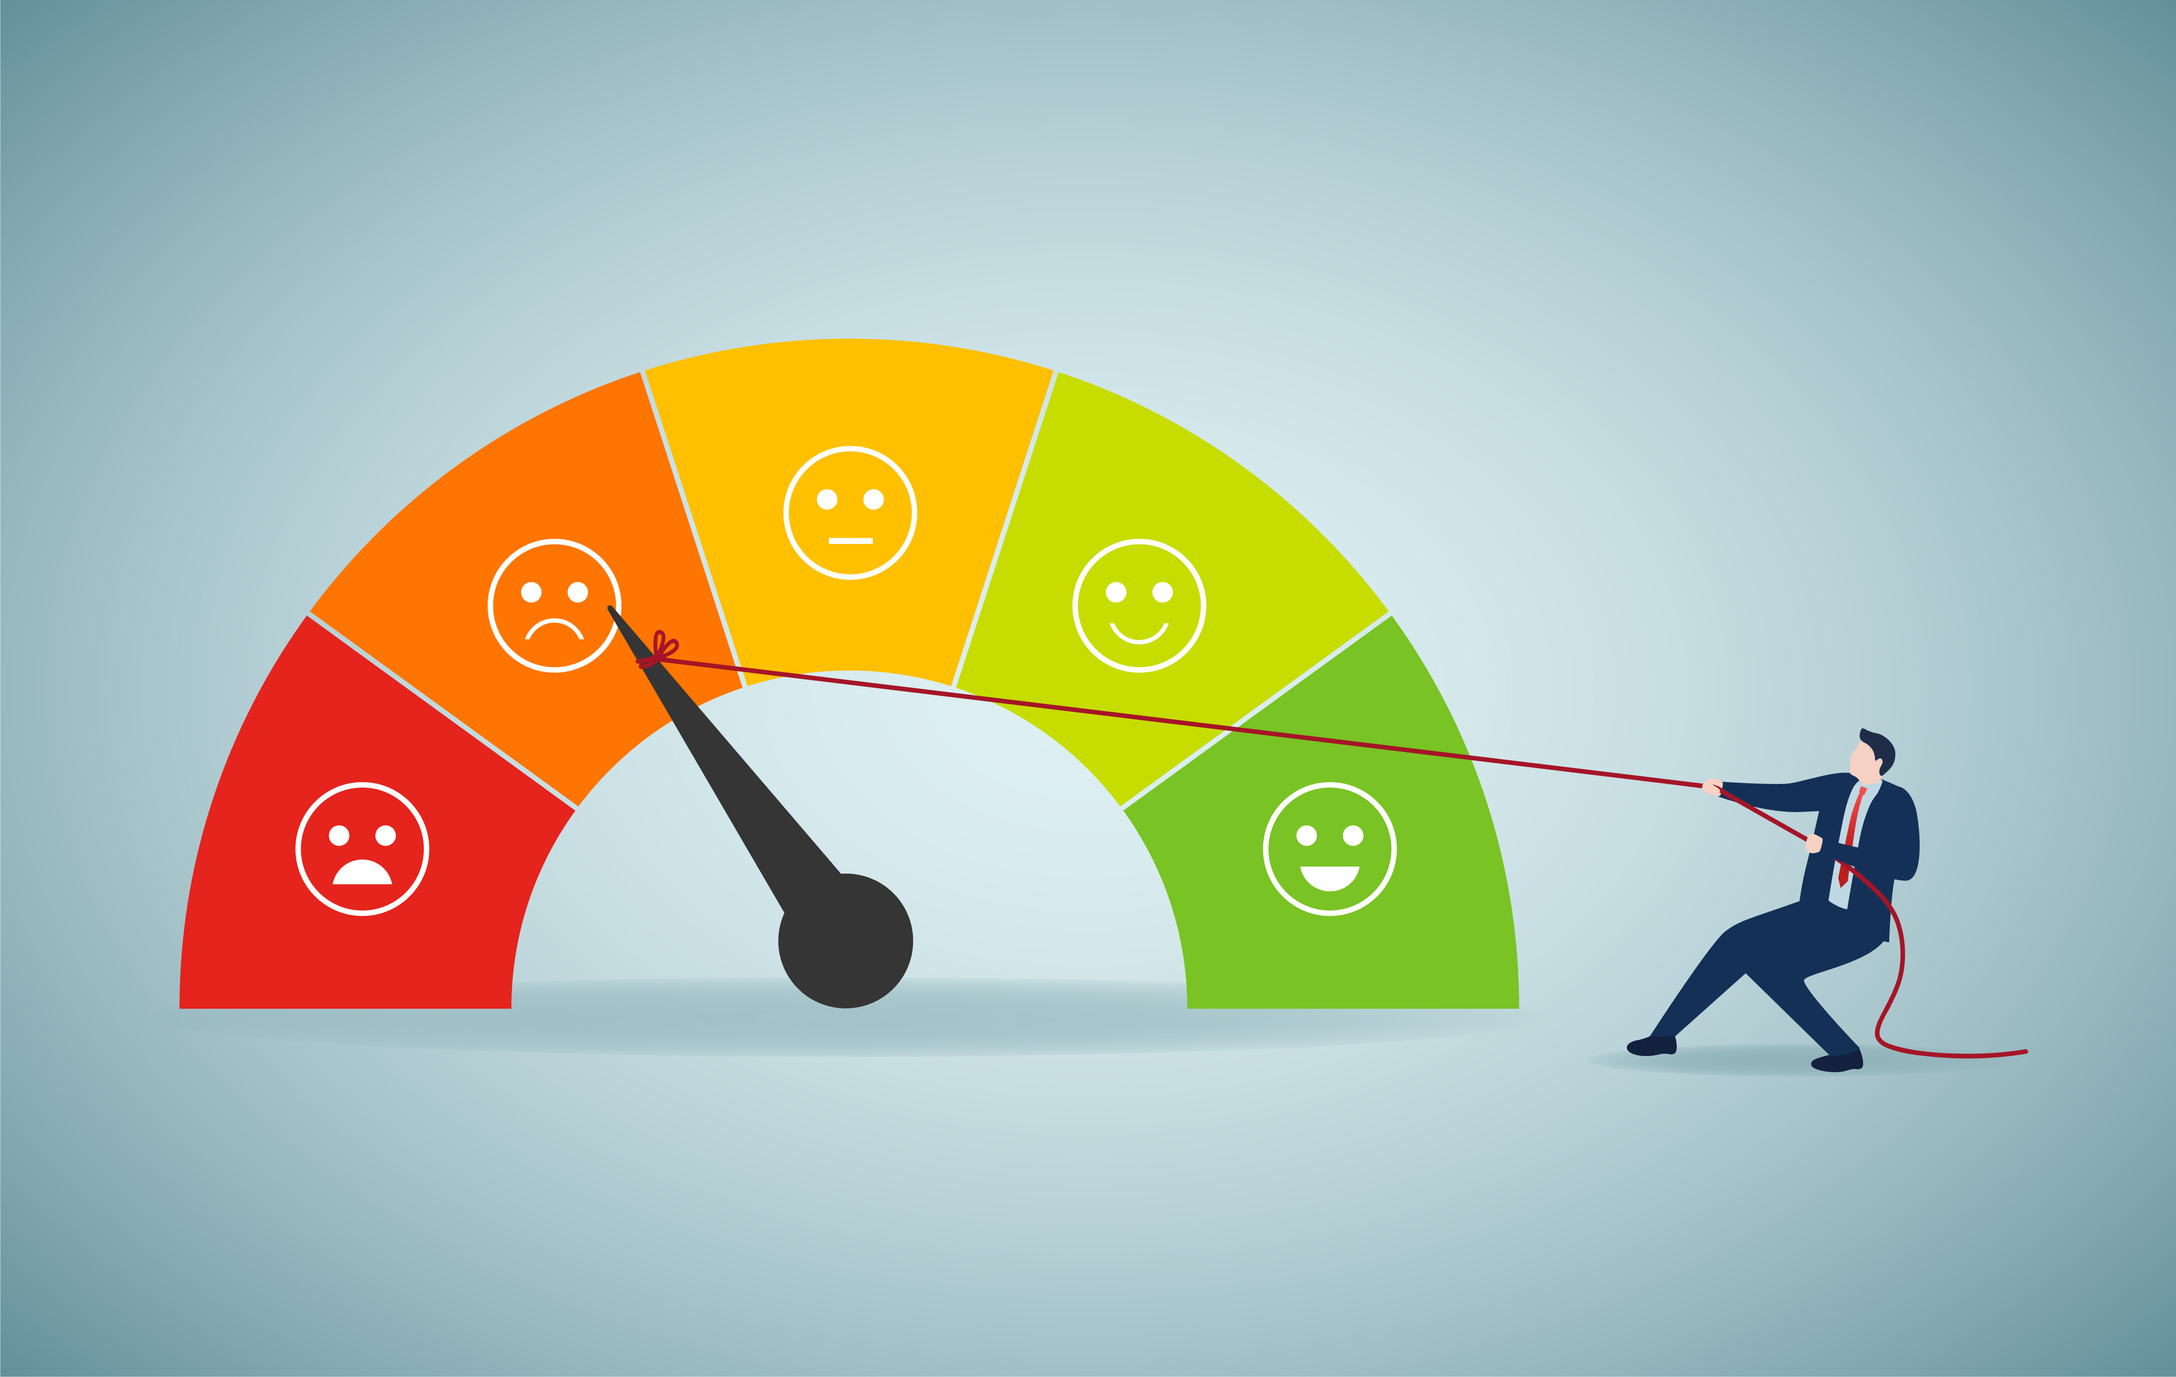 Performance rating or customer feedback，regulate emotion